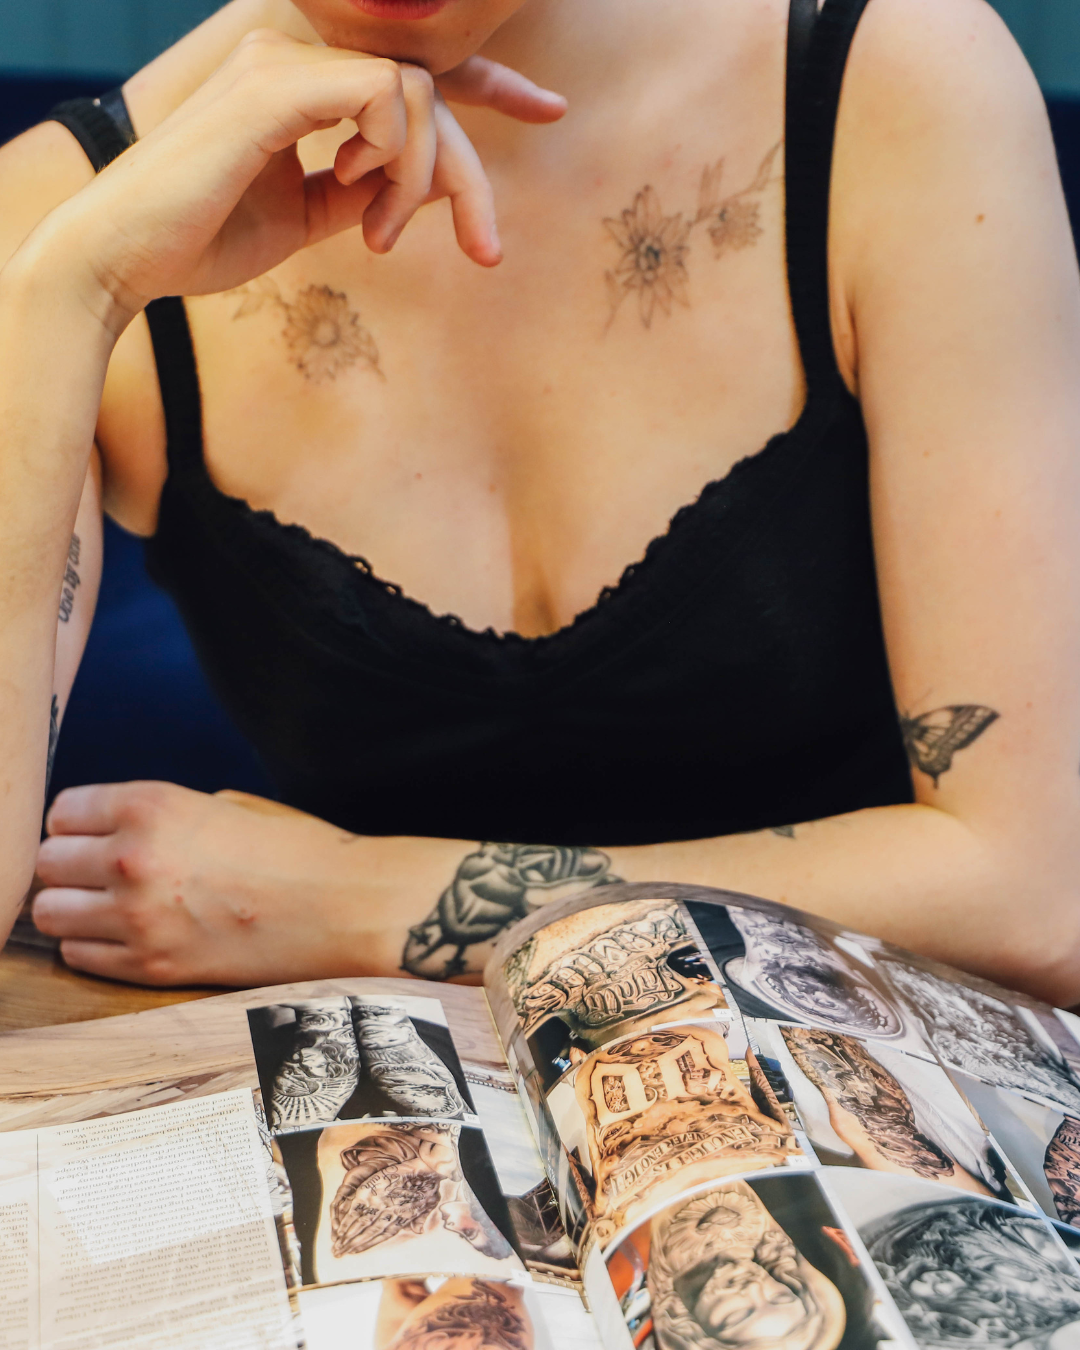 Amazon.com: Large Black Flower Chest Tattoos, Flower Back Waist Chest  Temporary Tattoo Sticker, Fake Tattoos for Women Lady, 8-Sheet : יופי וטיפוח